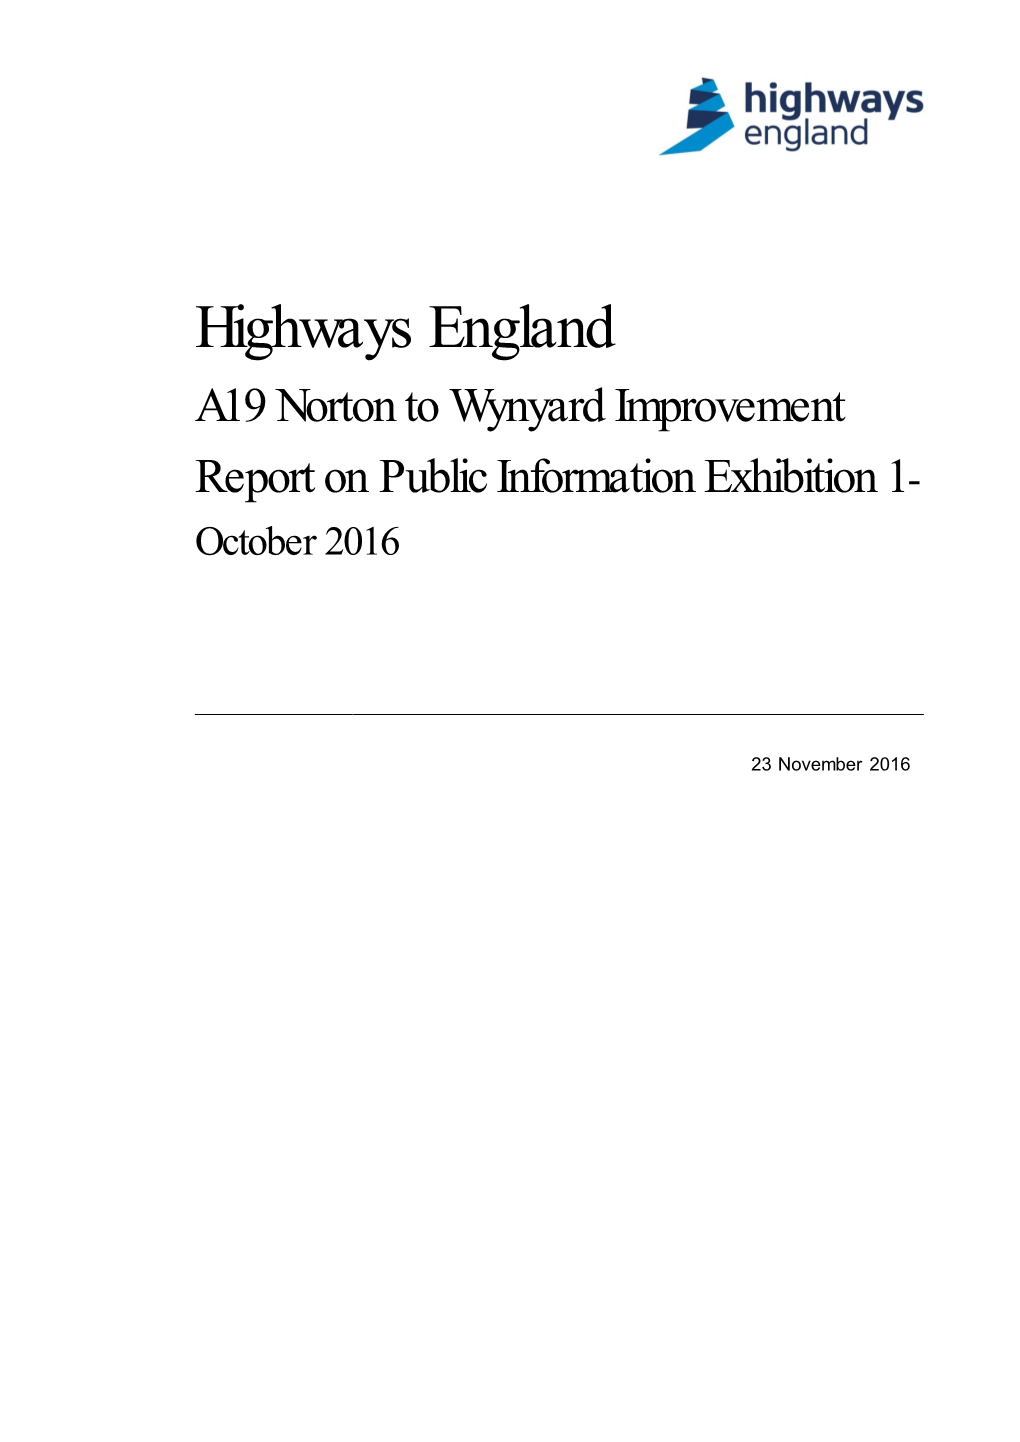 Highways England A19 Norton to Wynyard Improvement Report on Public Information Exhibition 1- October 2016